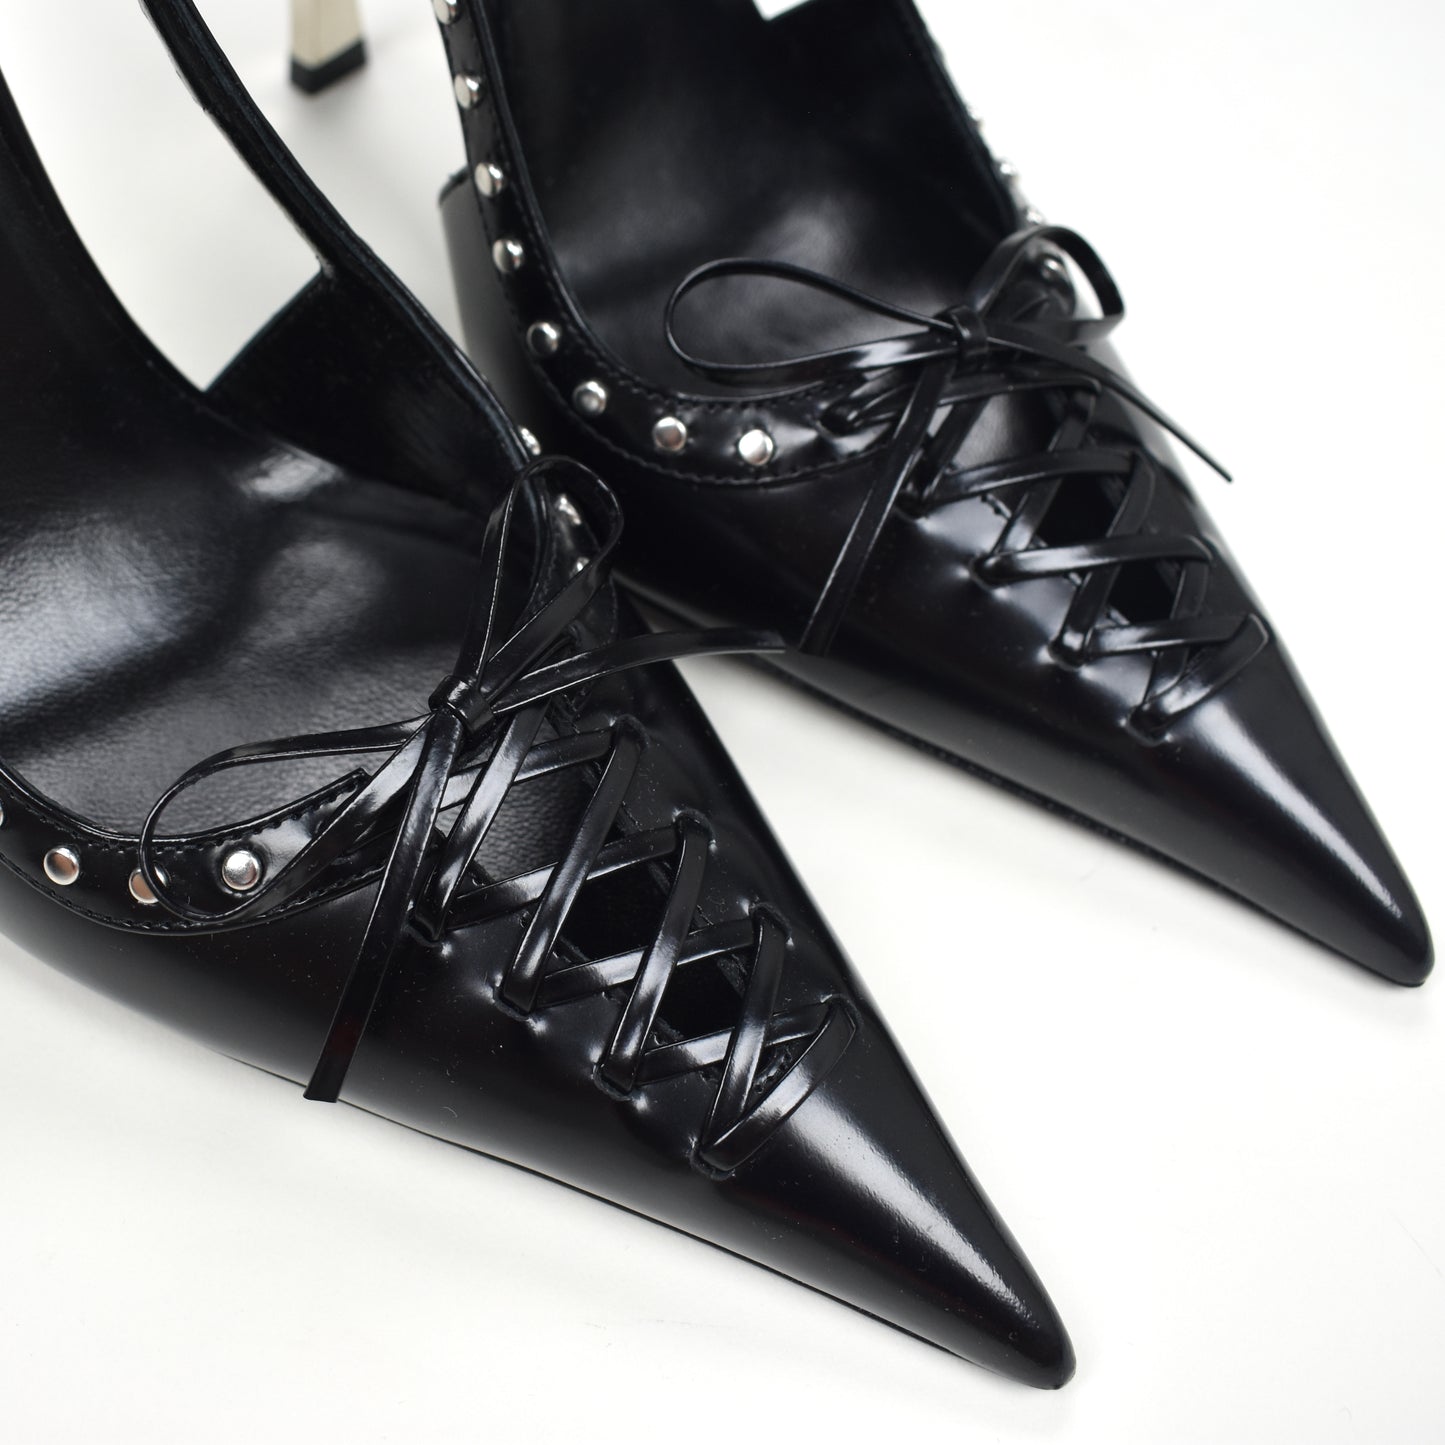 Versace x Dua Lipa - Black Leather Corset Heels